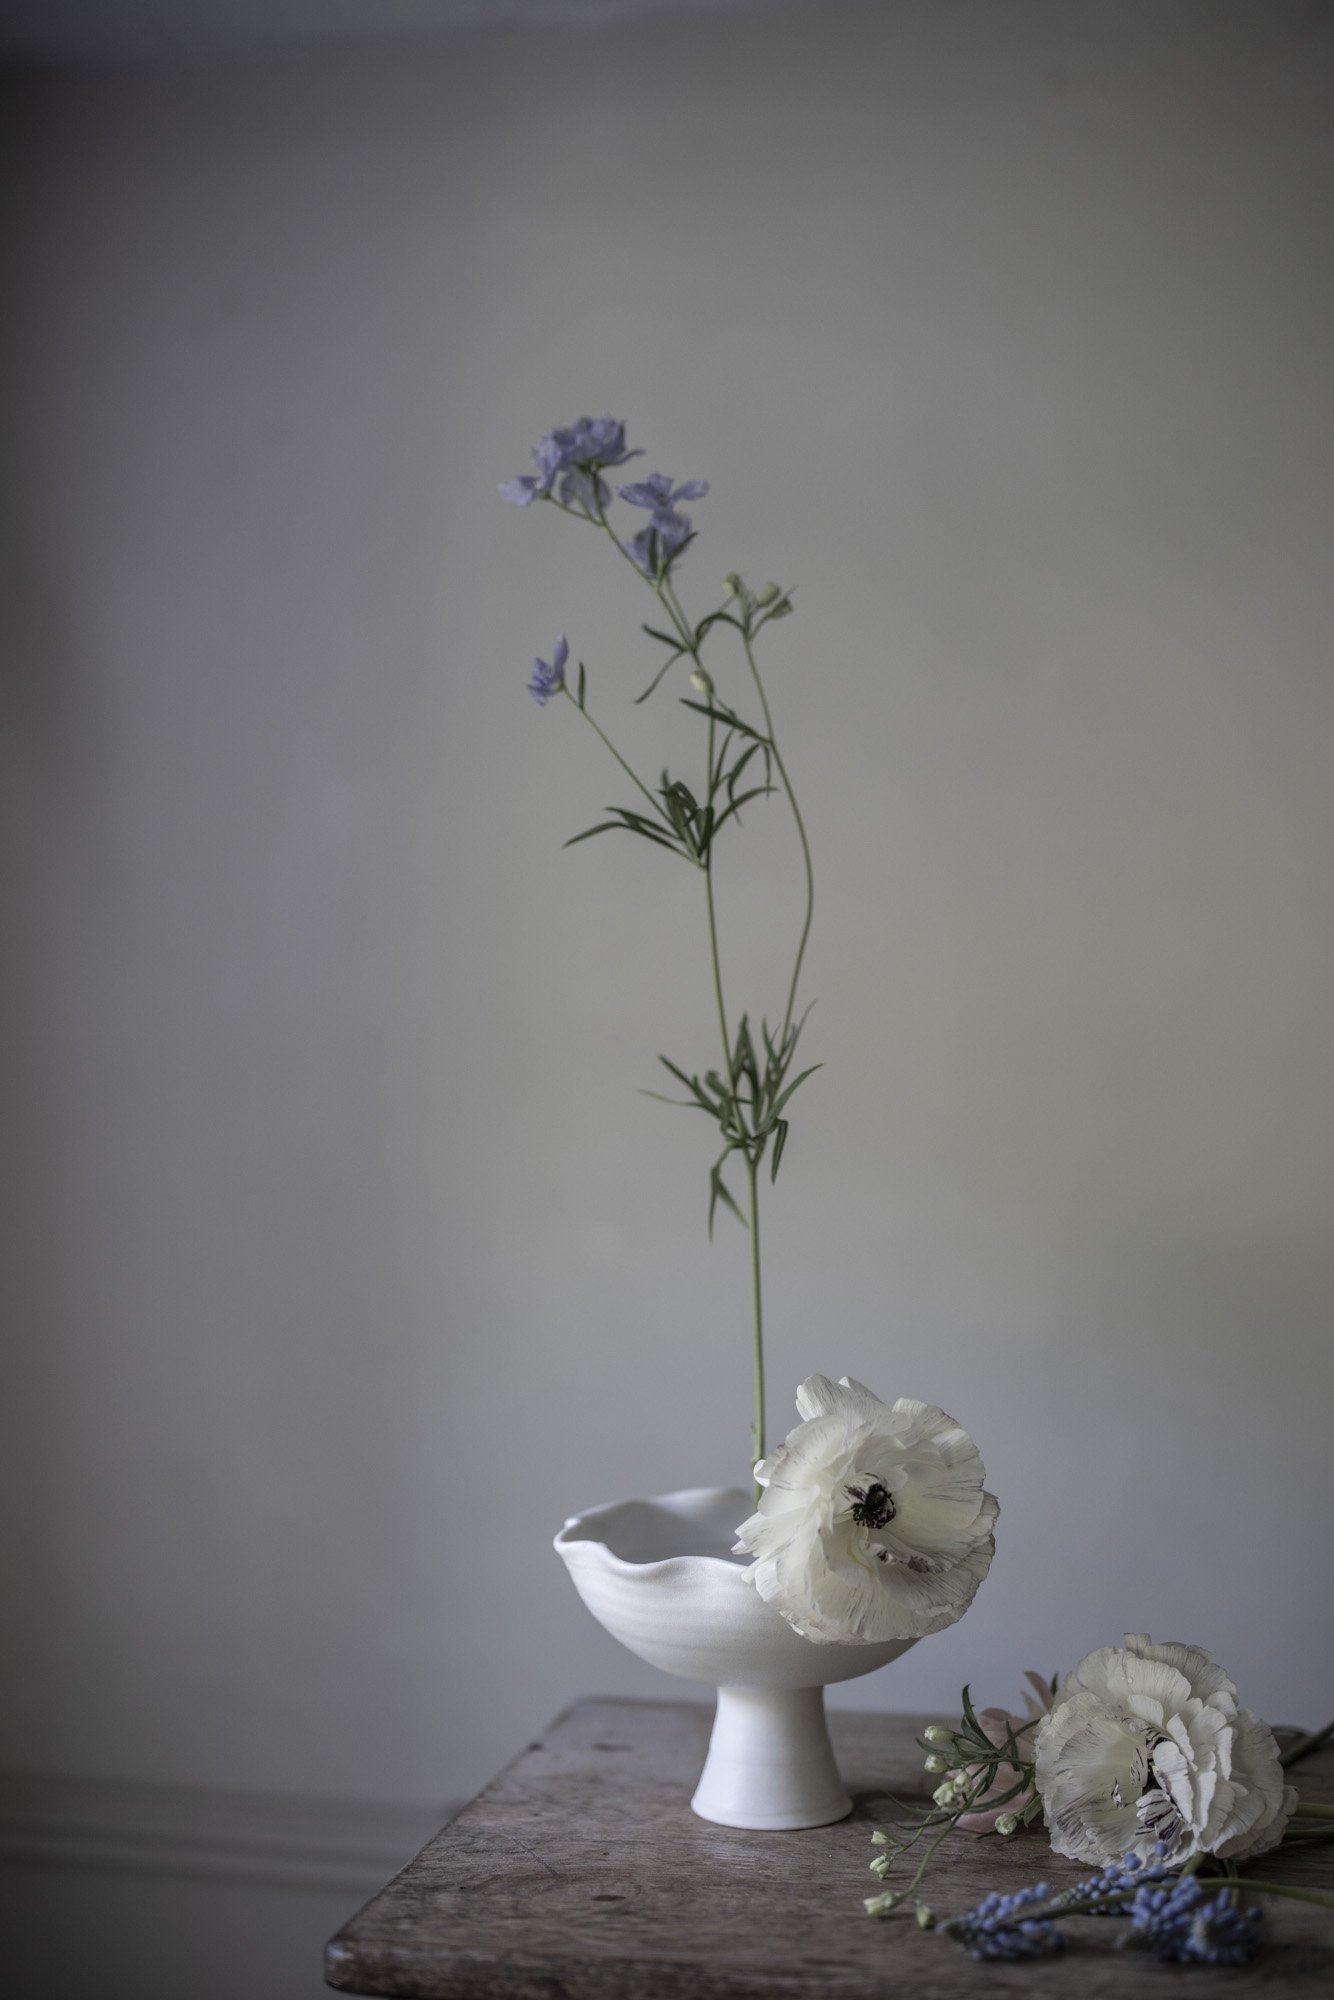 Paper-thin-moon-flower-frog-bowl-4.jpg